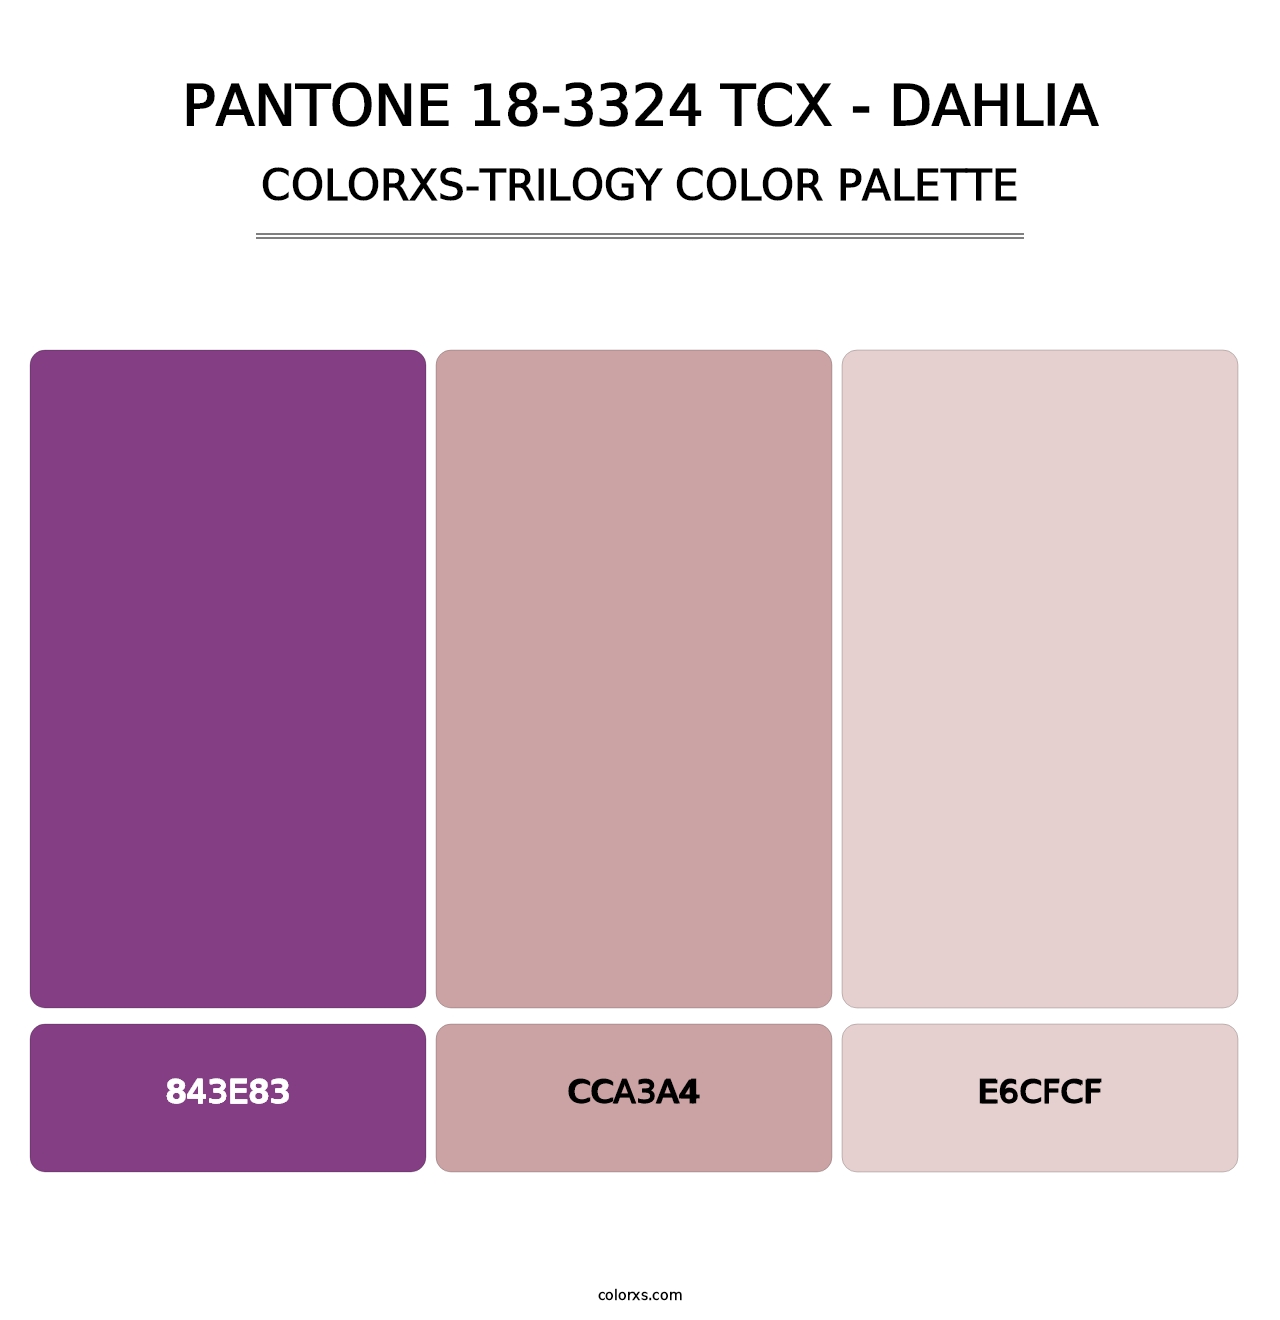 PANTONE 18-3324 TCX - Dahlia - Colorxs Trilogy Palette